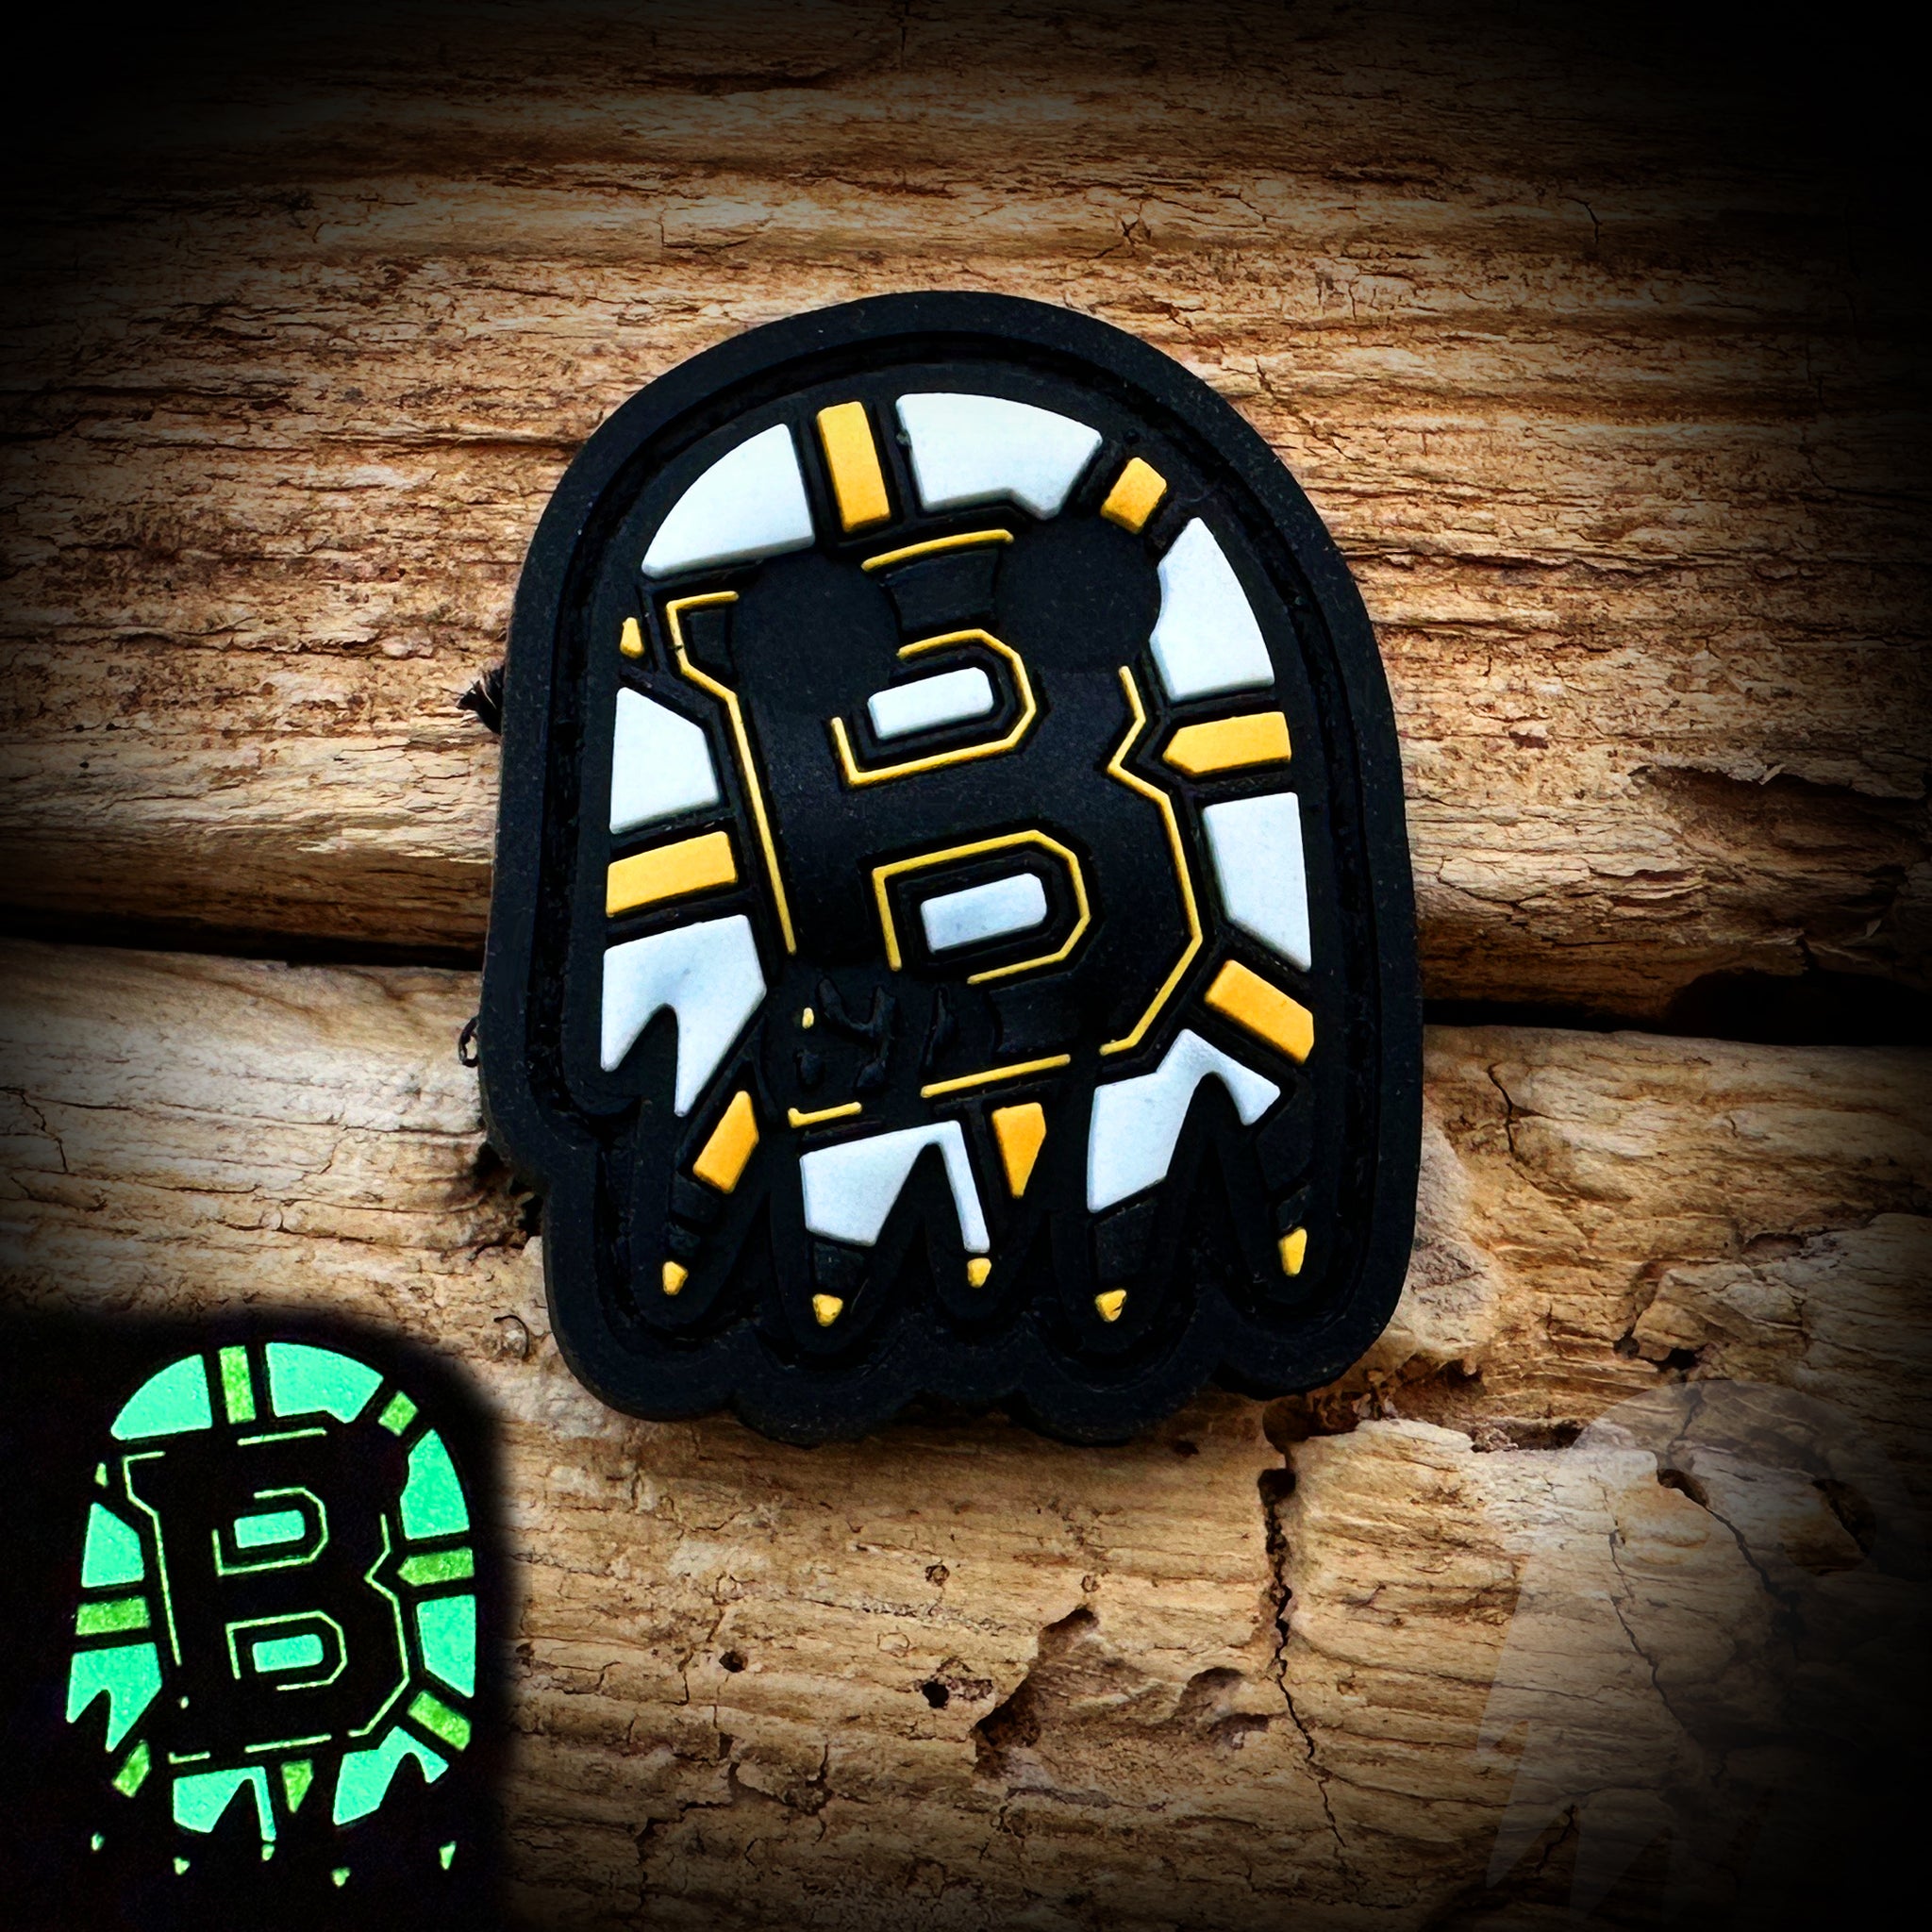 Boston Yellow & Gold Bear Hockey Team Boomer - Glow in the dark - HOCKEY